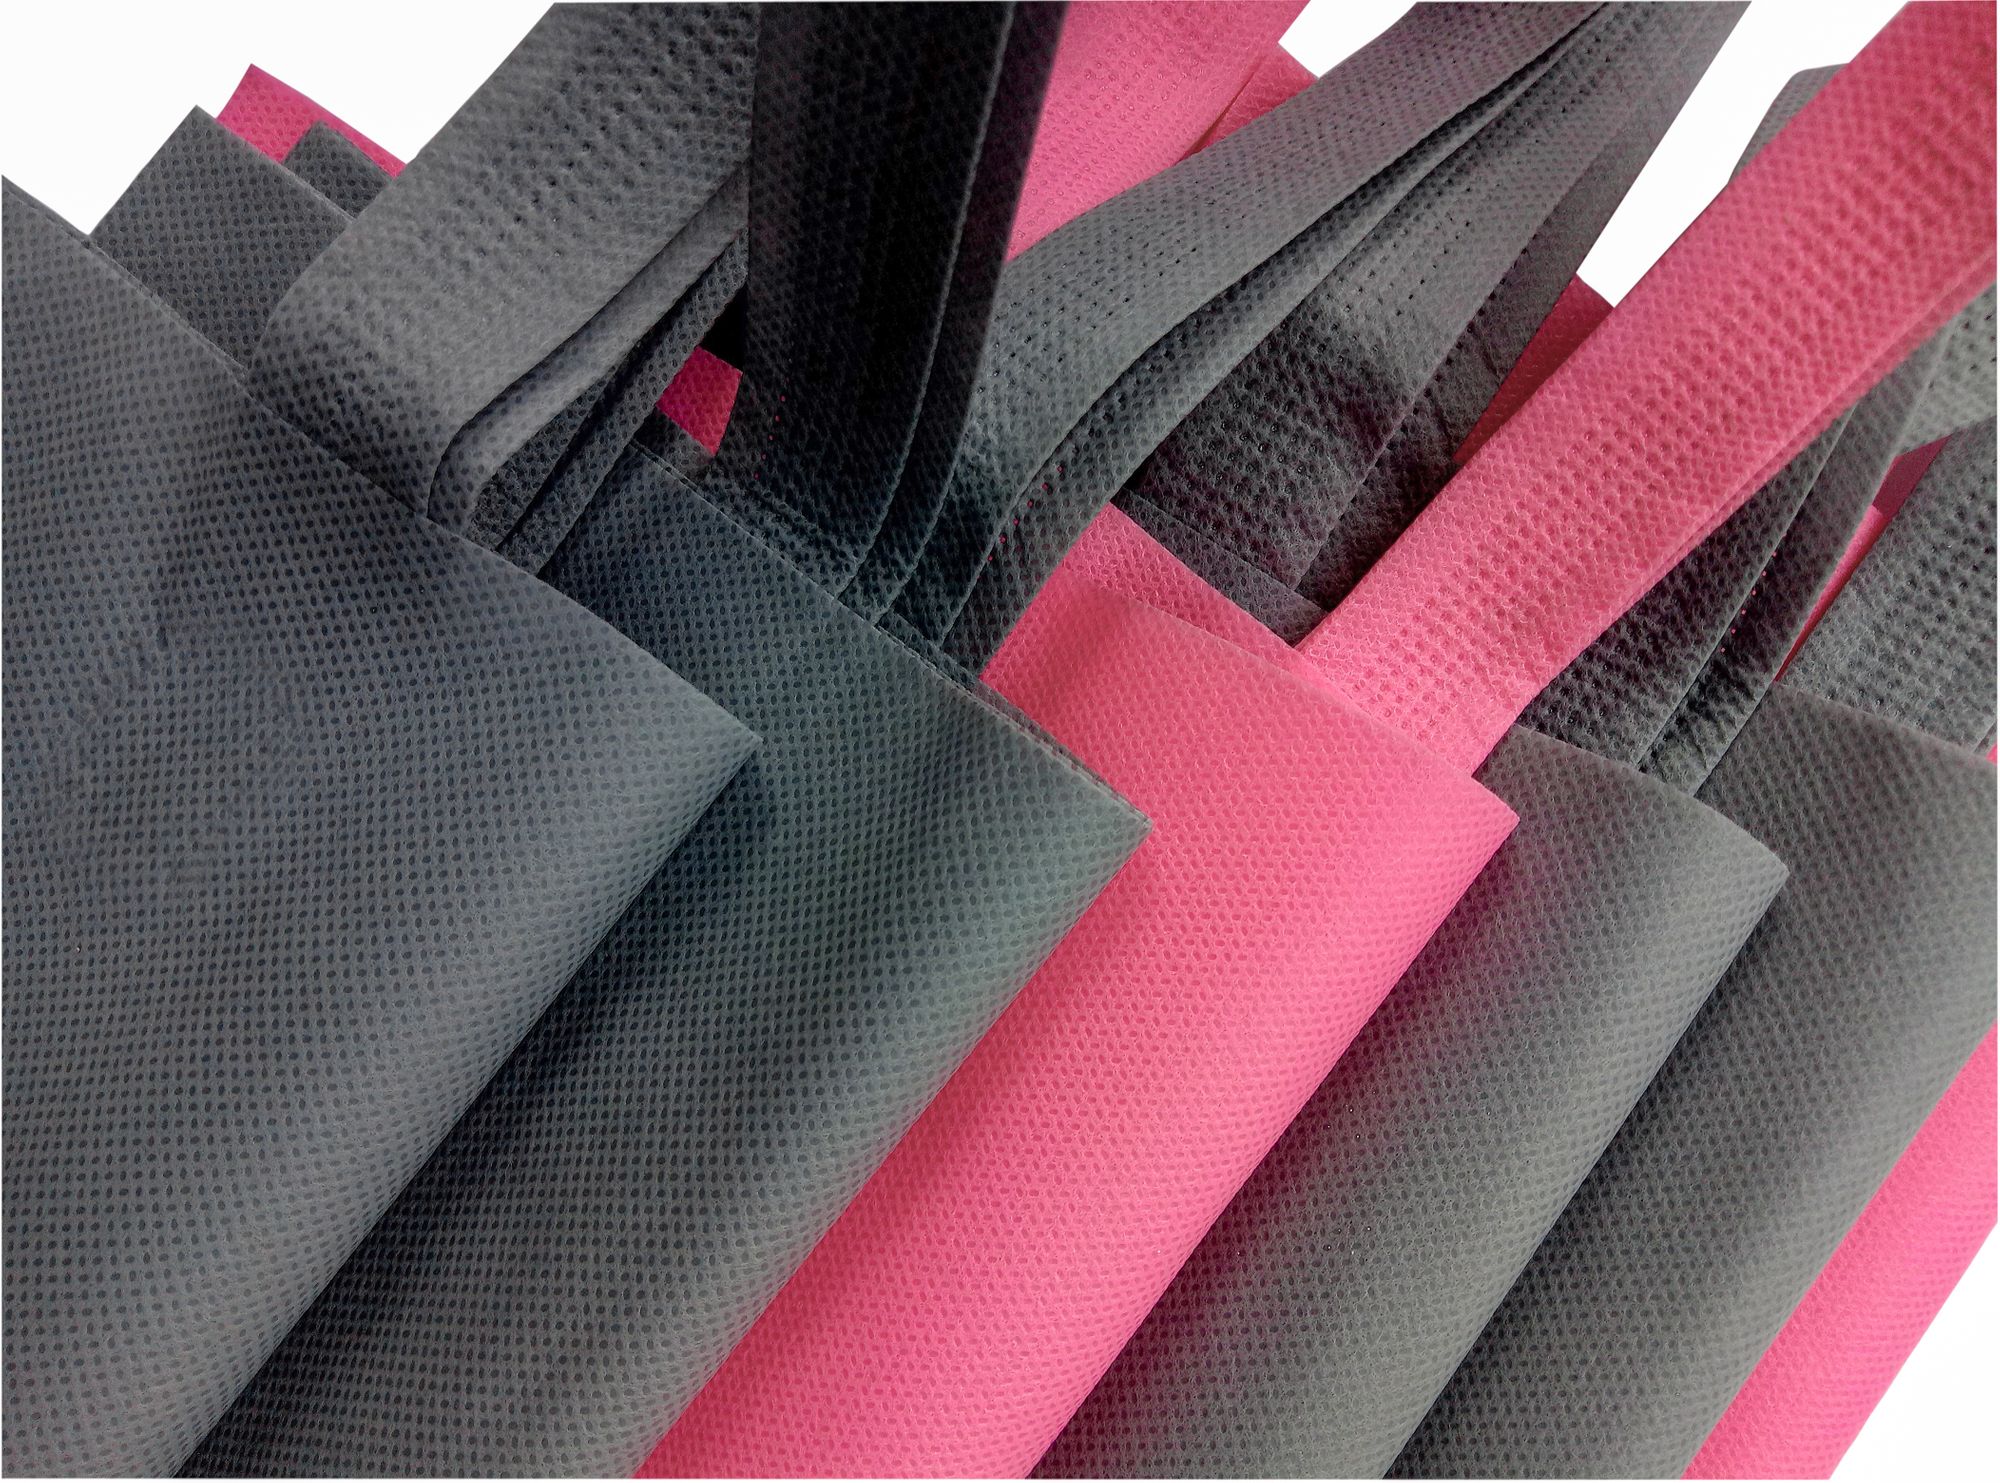 Imprinted Soft Loop Handle Bags: Make the Bag Your Own | APlasticBag.com